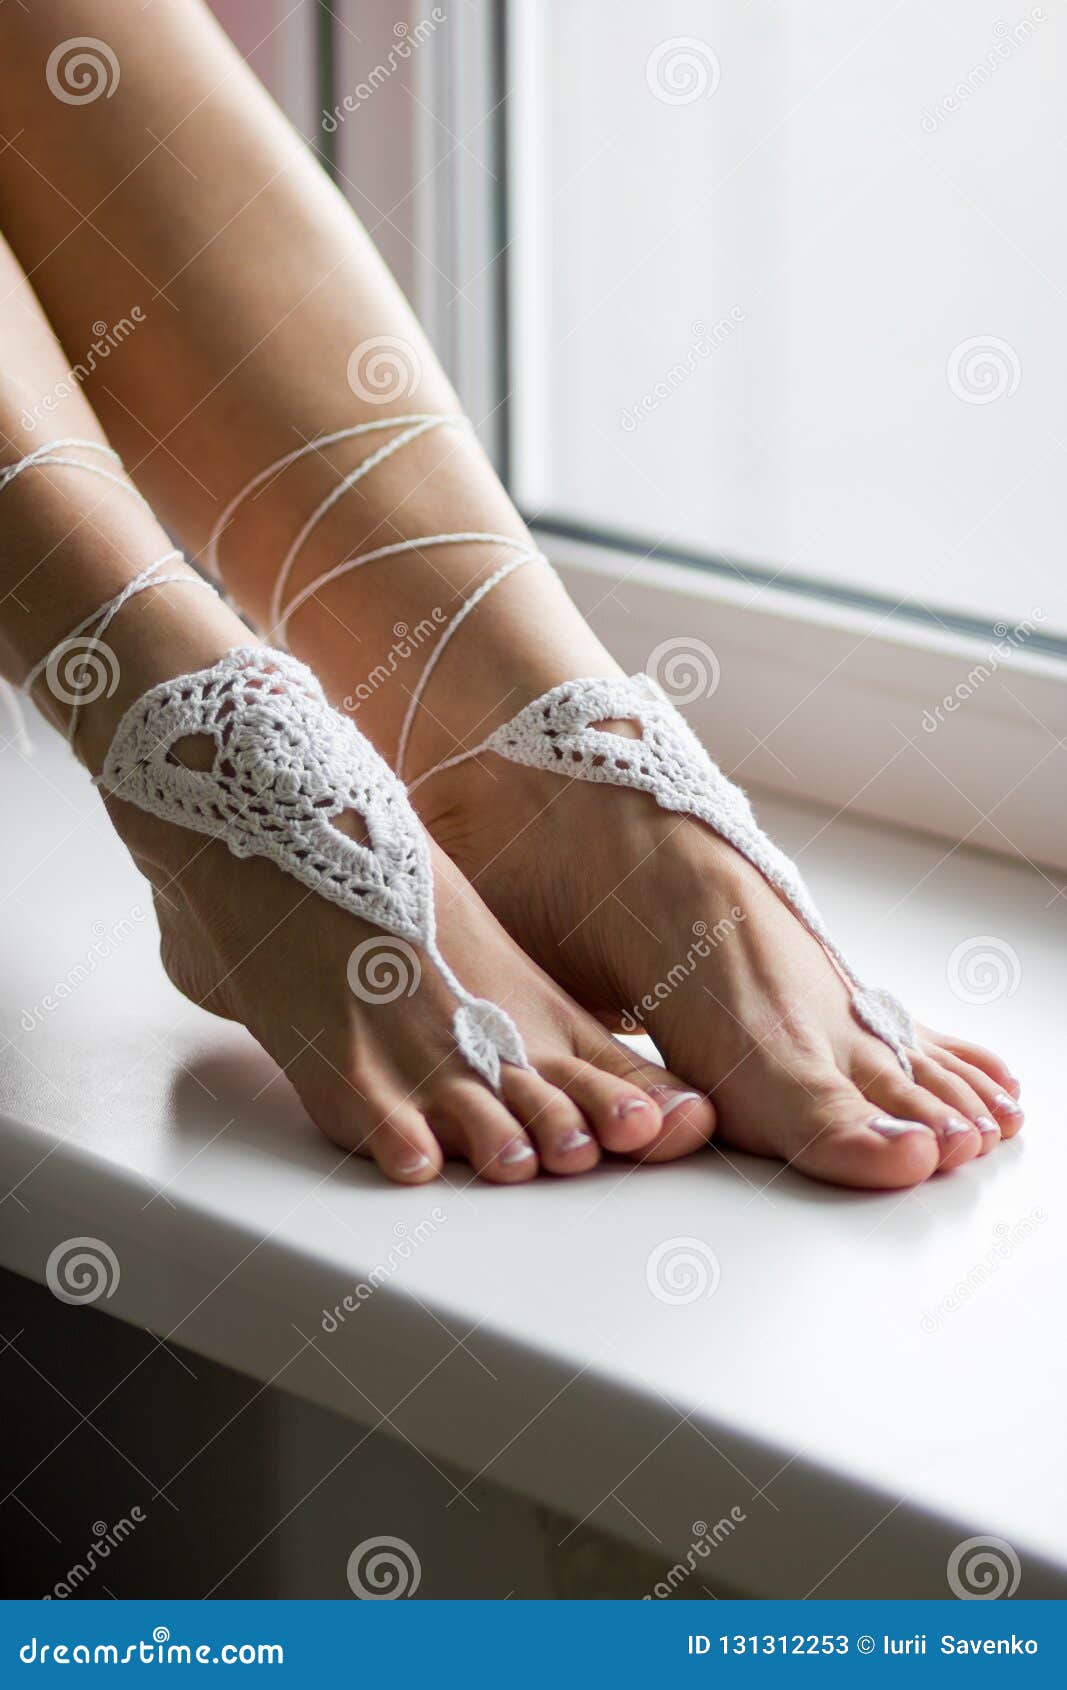 Beautiful Female Feet on a Windowsill with Foot Jewelry Stock Image